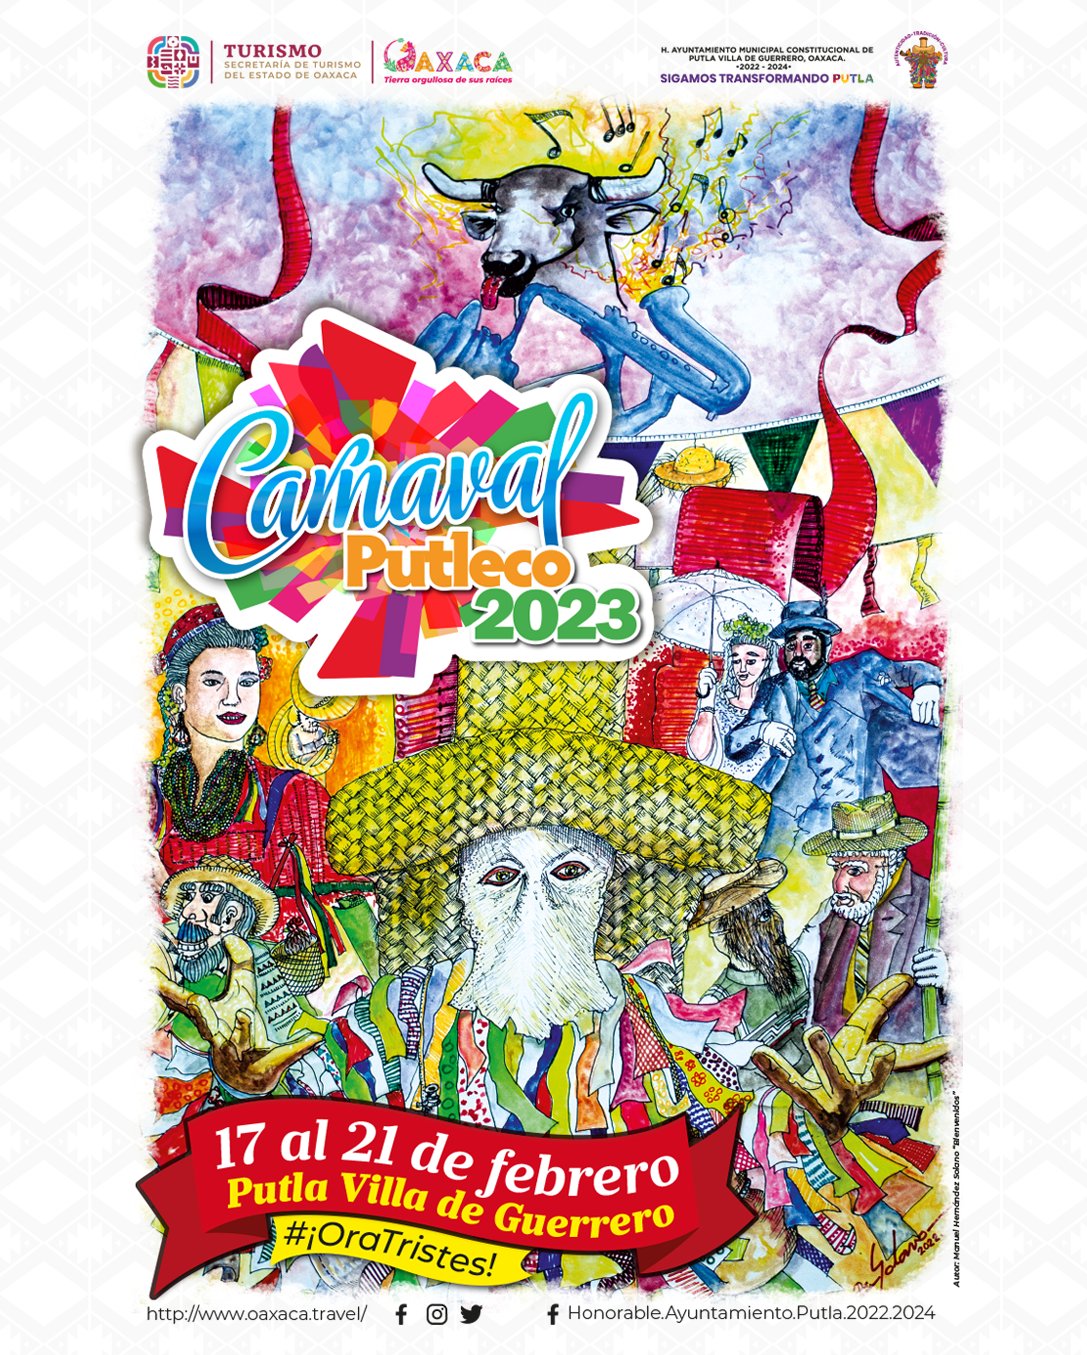 carnaval putleco 2023 oaxaca donde es